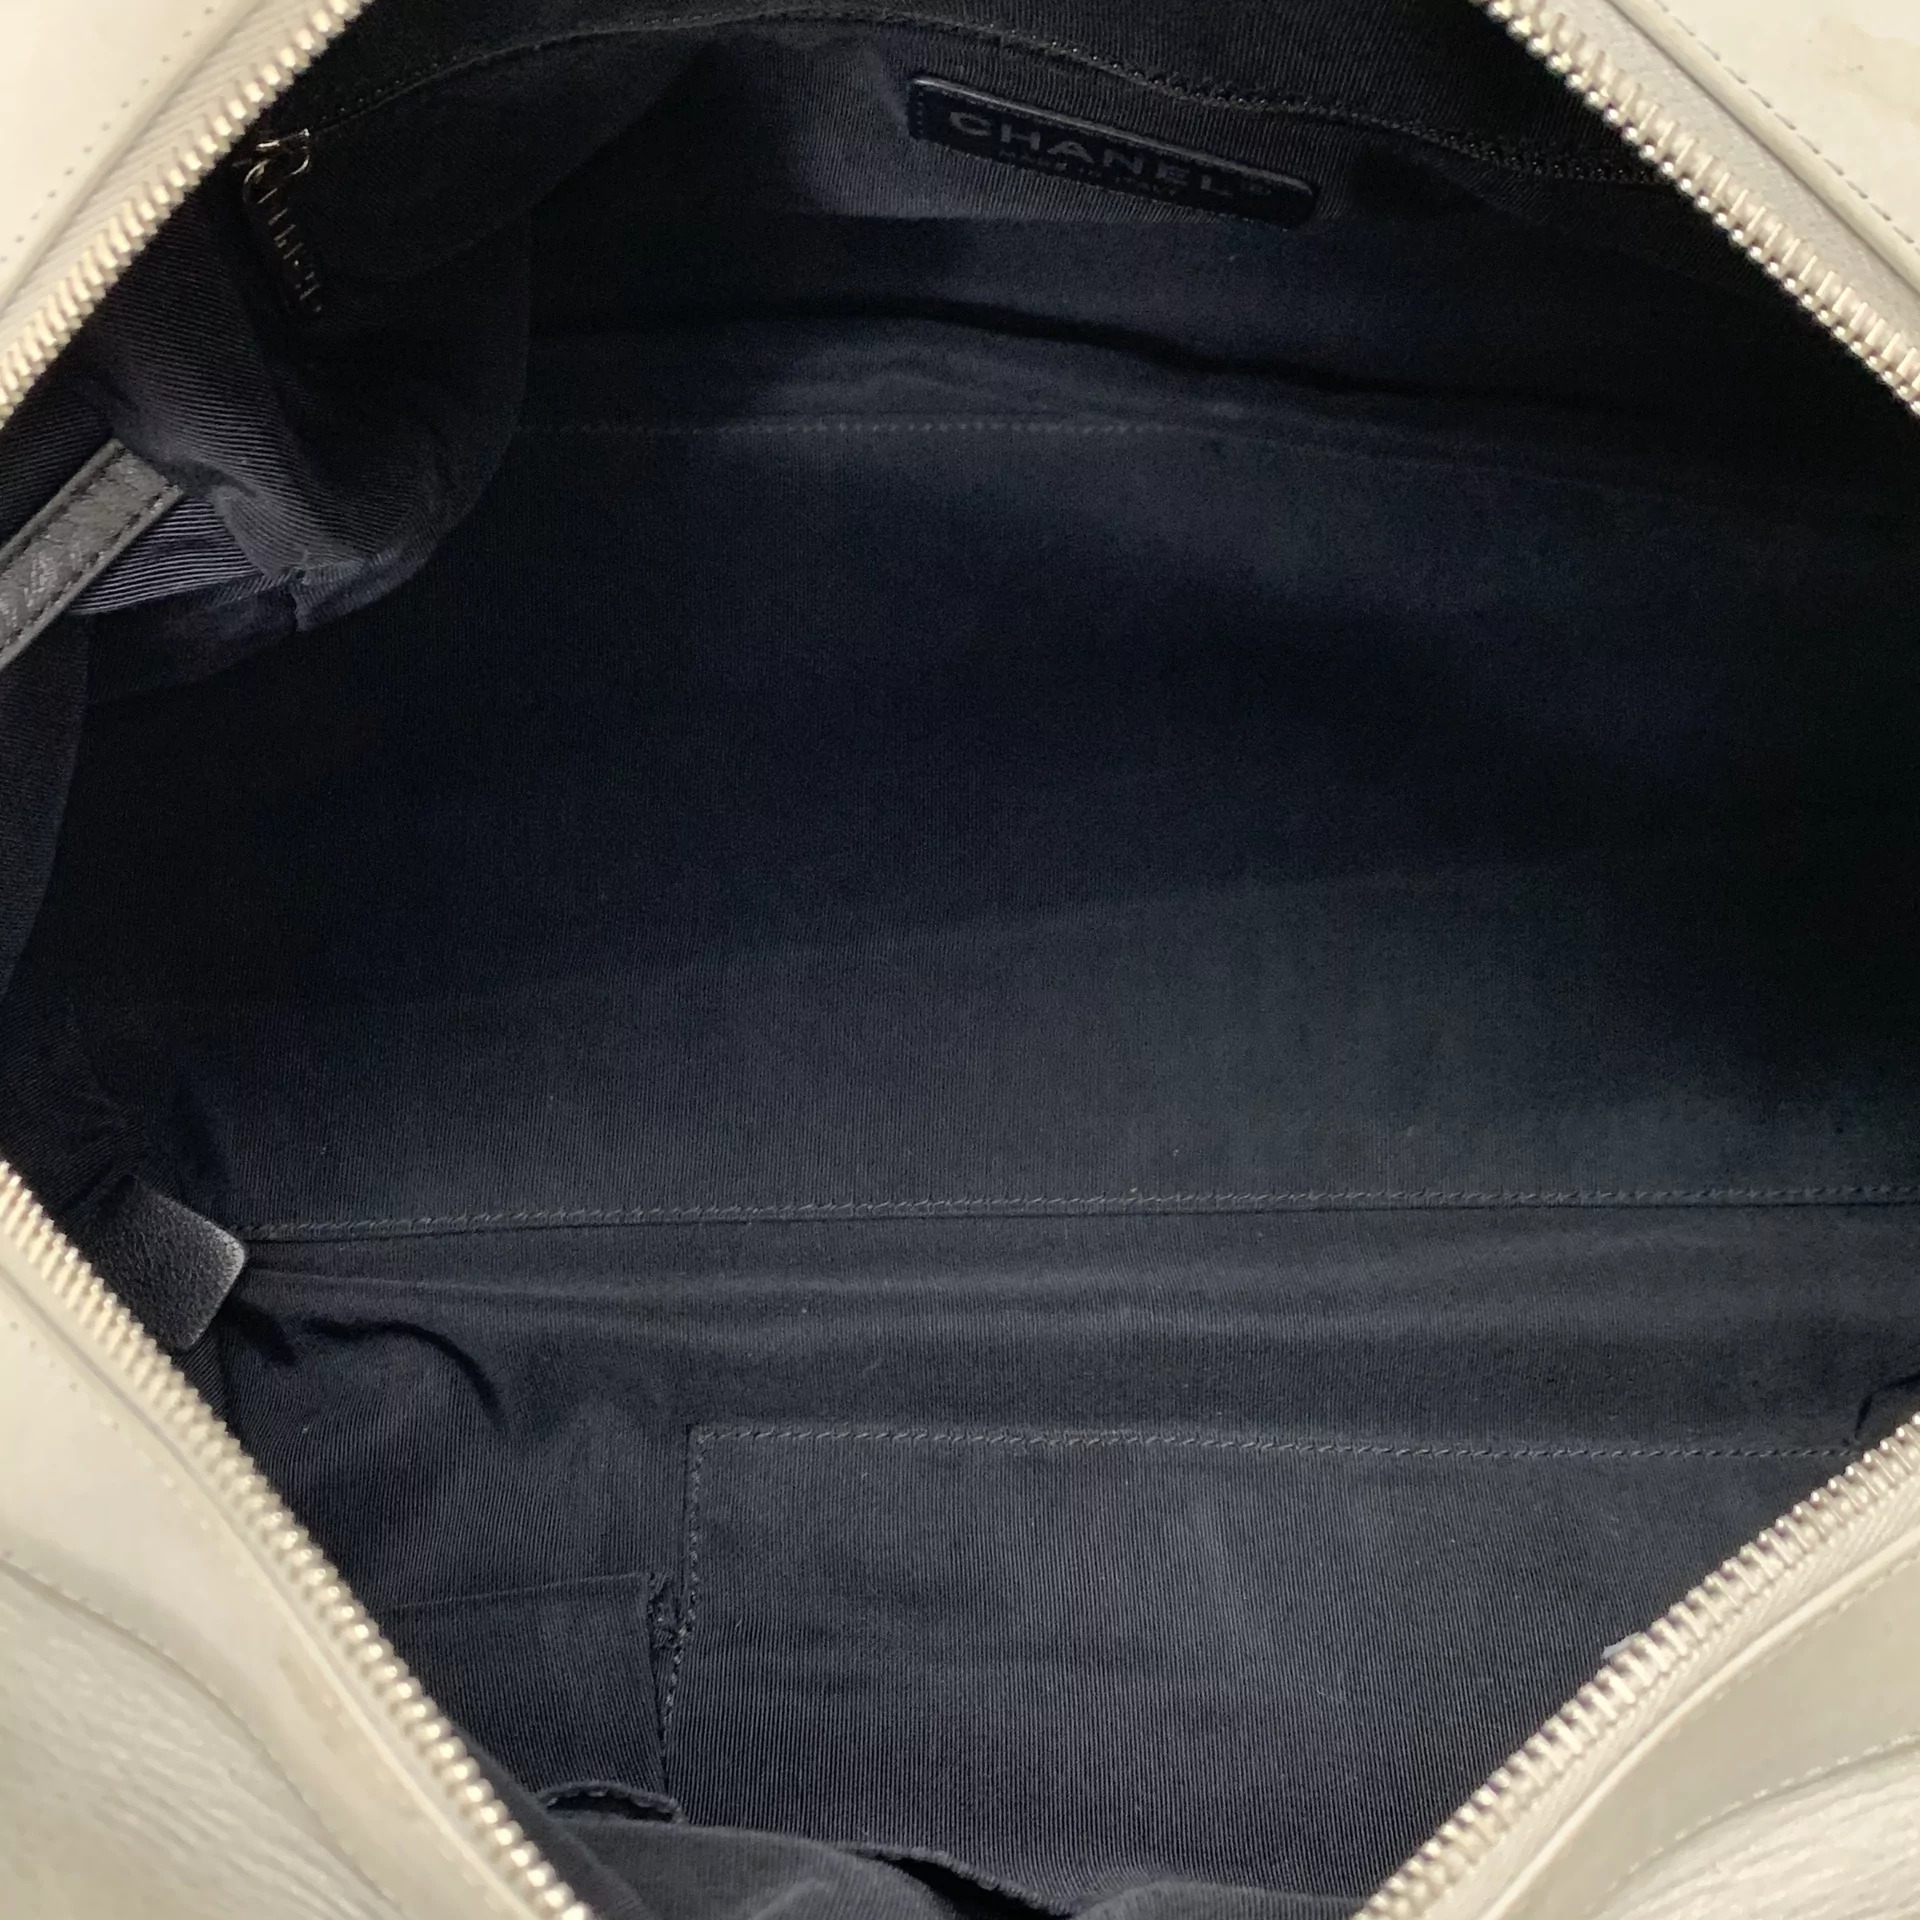 Bolsa Chanel Shoulder Bag Box